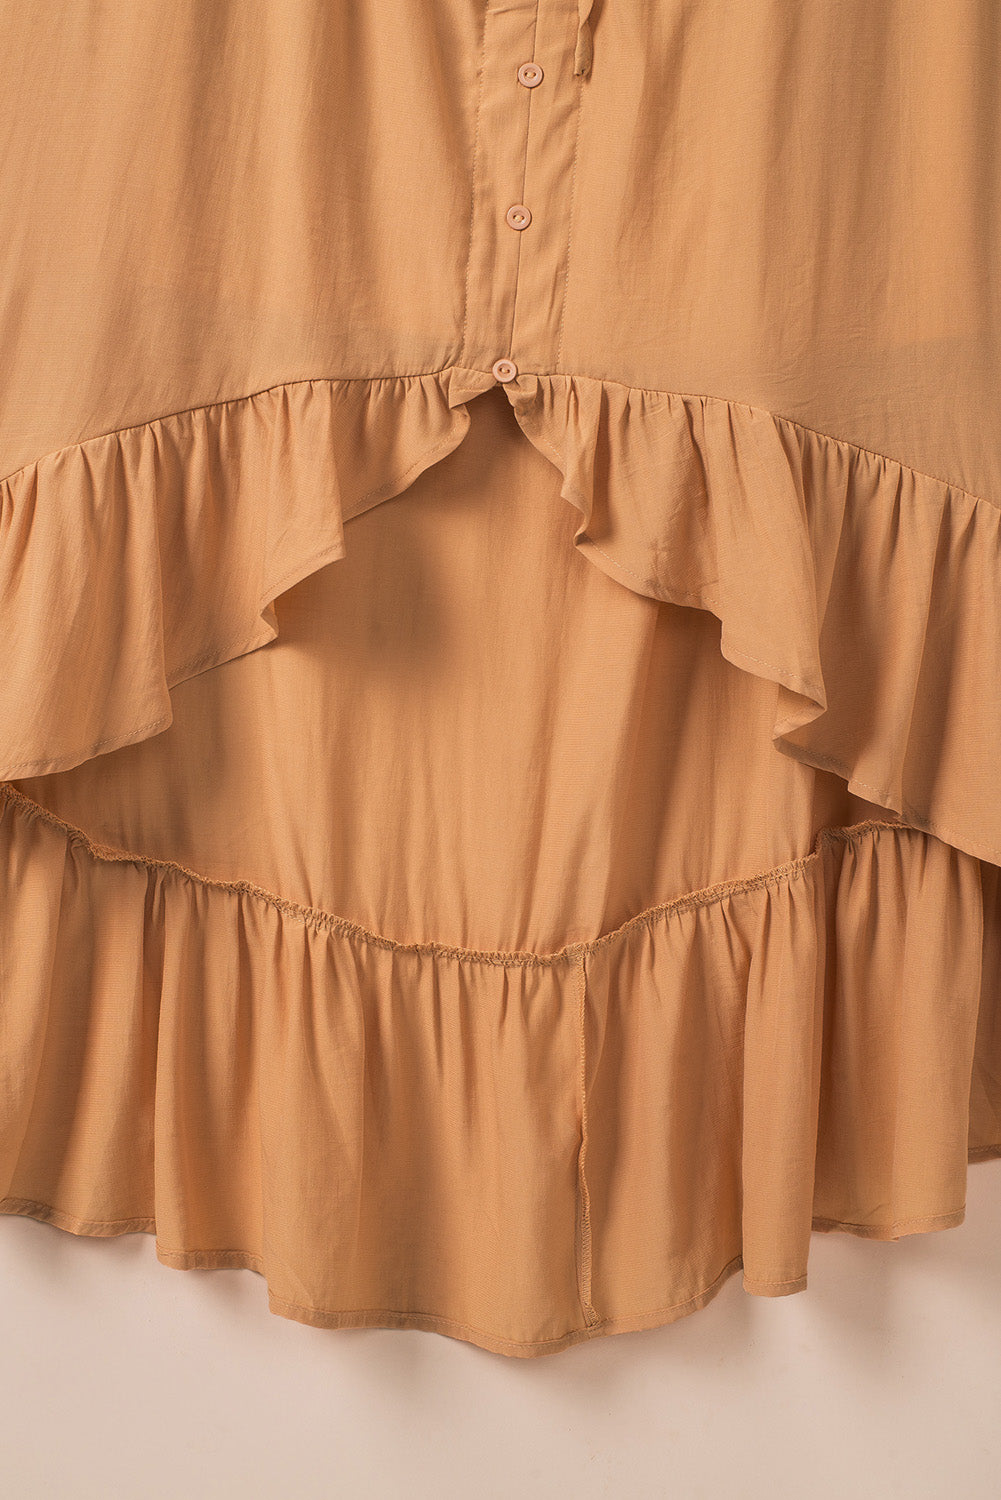 Apricot Glaze High Low Maxi haljina spuštenih ramena